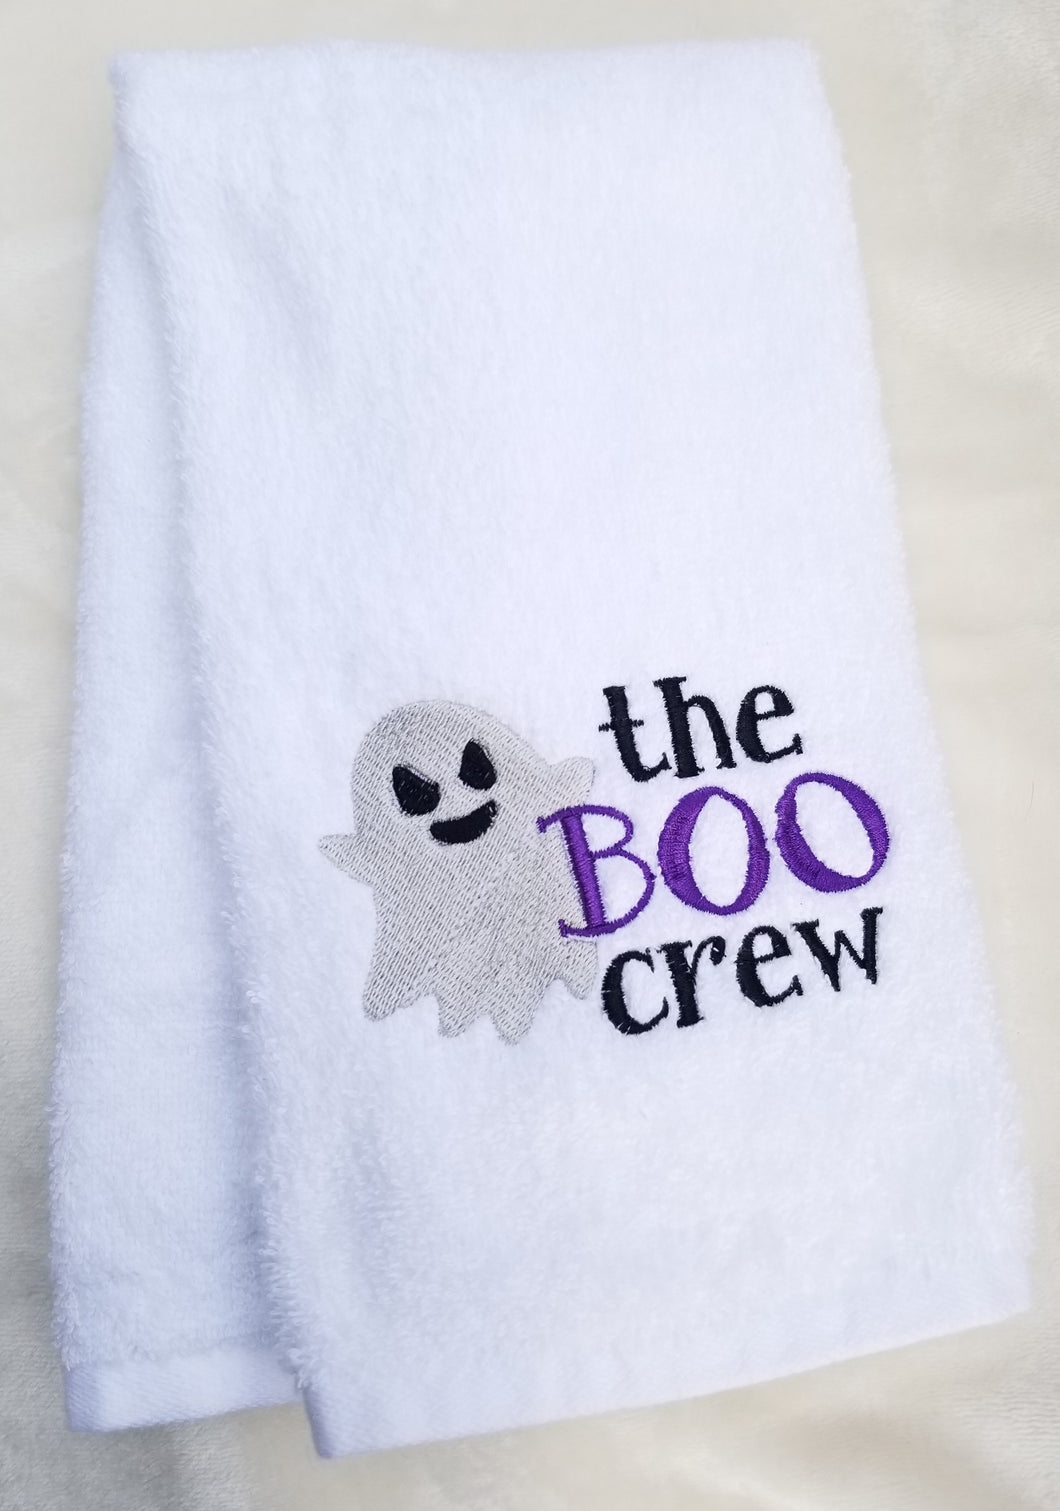 Halloween Hand Towel Custom Embroidered White Spa Towel